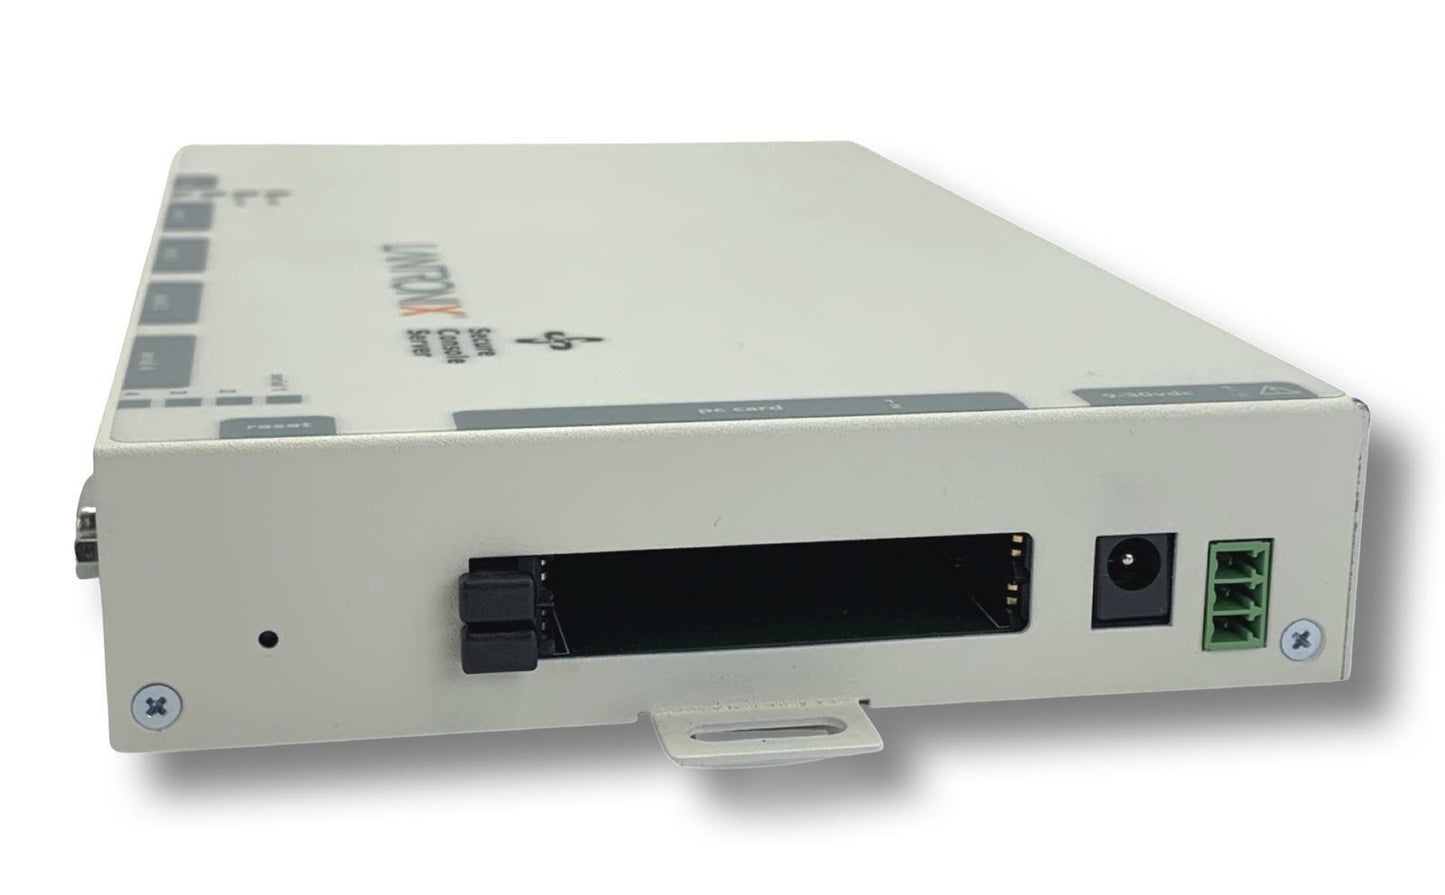 Lantronix SCS400 Secure Console Server w/ Zoom ITU v.92 Standard PC Card 56K